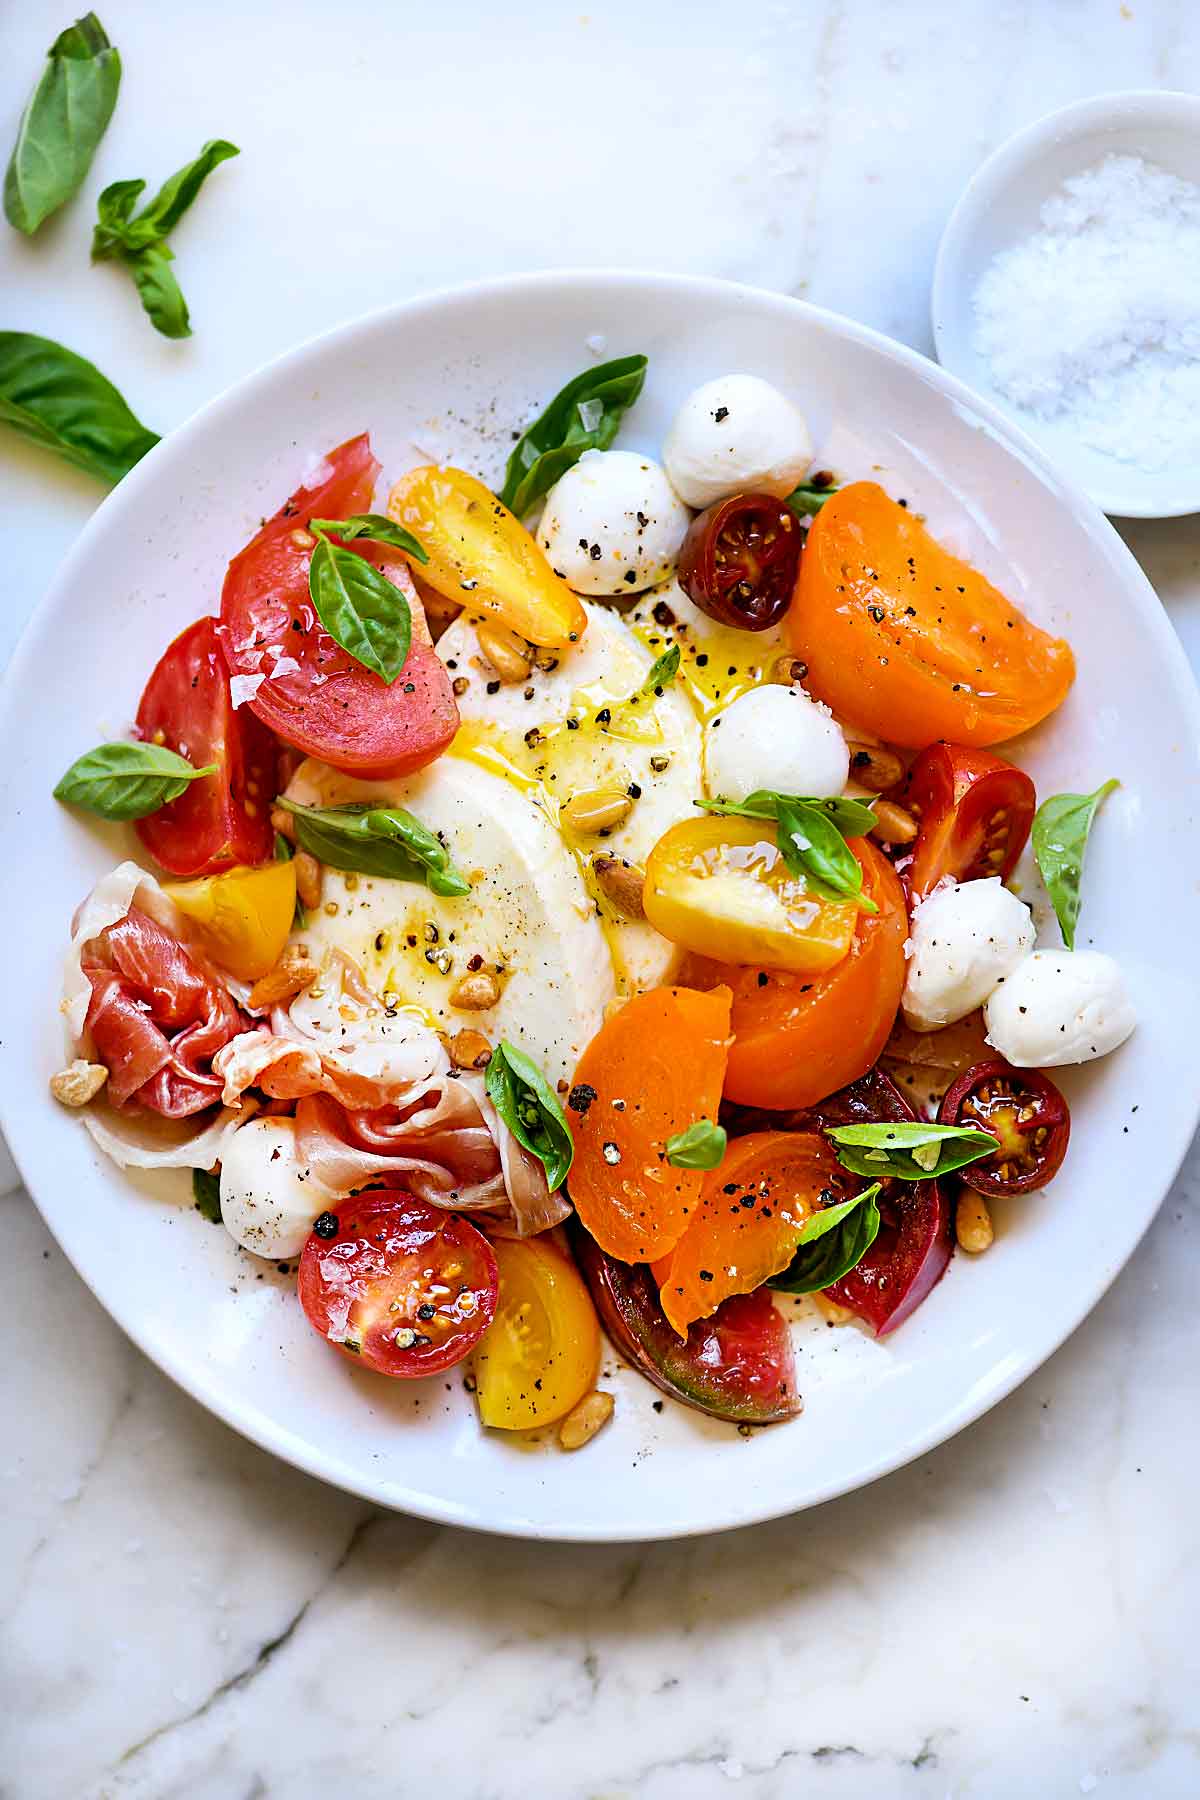 Salade Caprese aux tomates anciennes | foodiecrush.com #caprese #salade #tomates anciennes #basilic #recettes